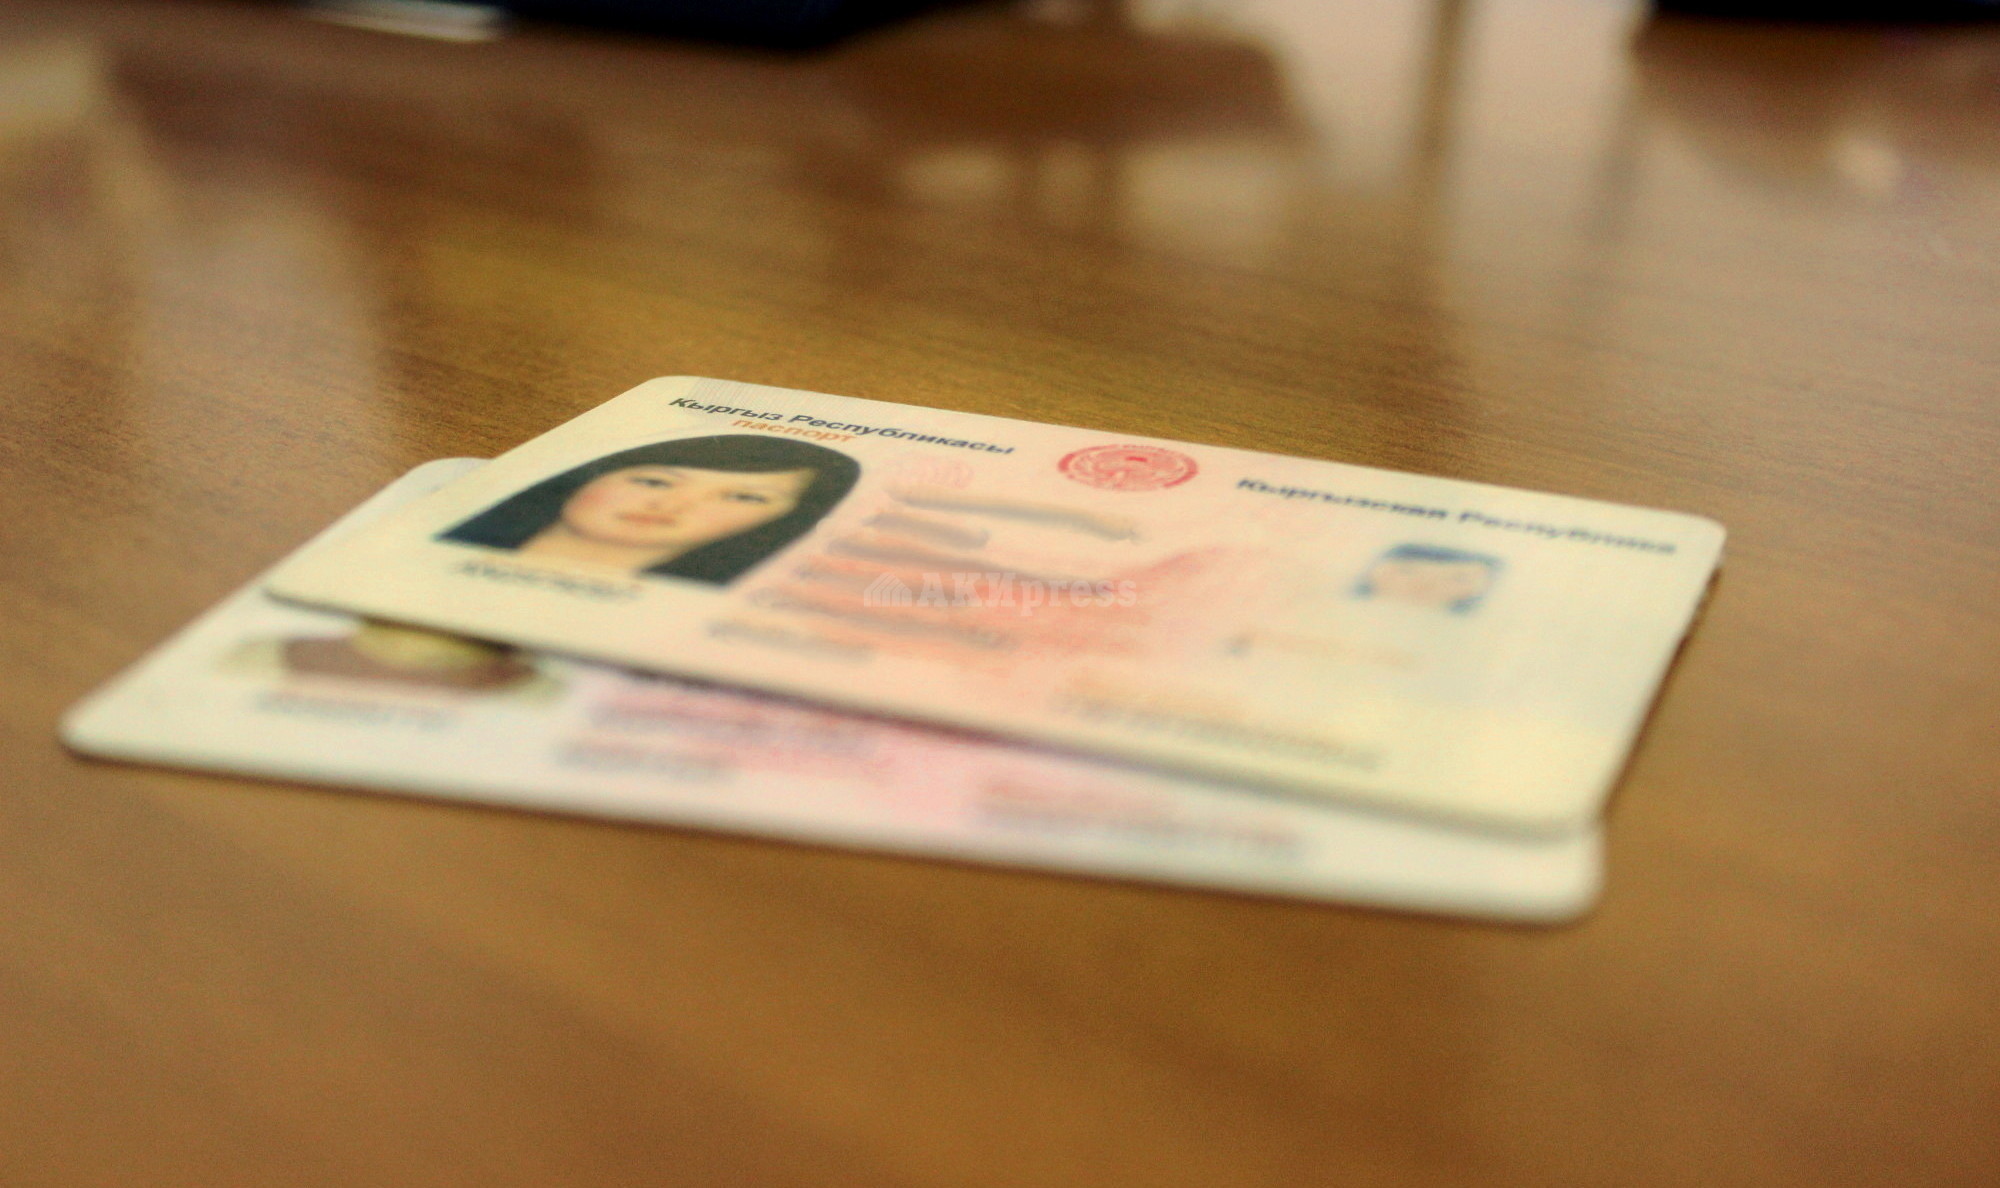 ID-Card